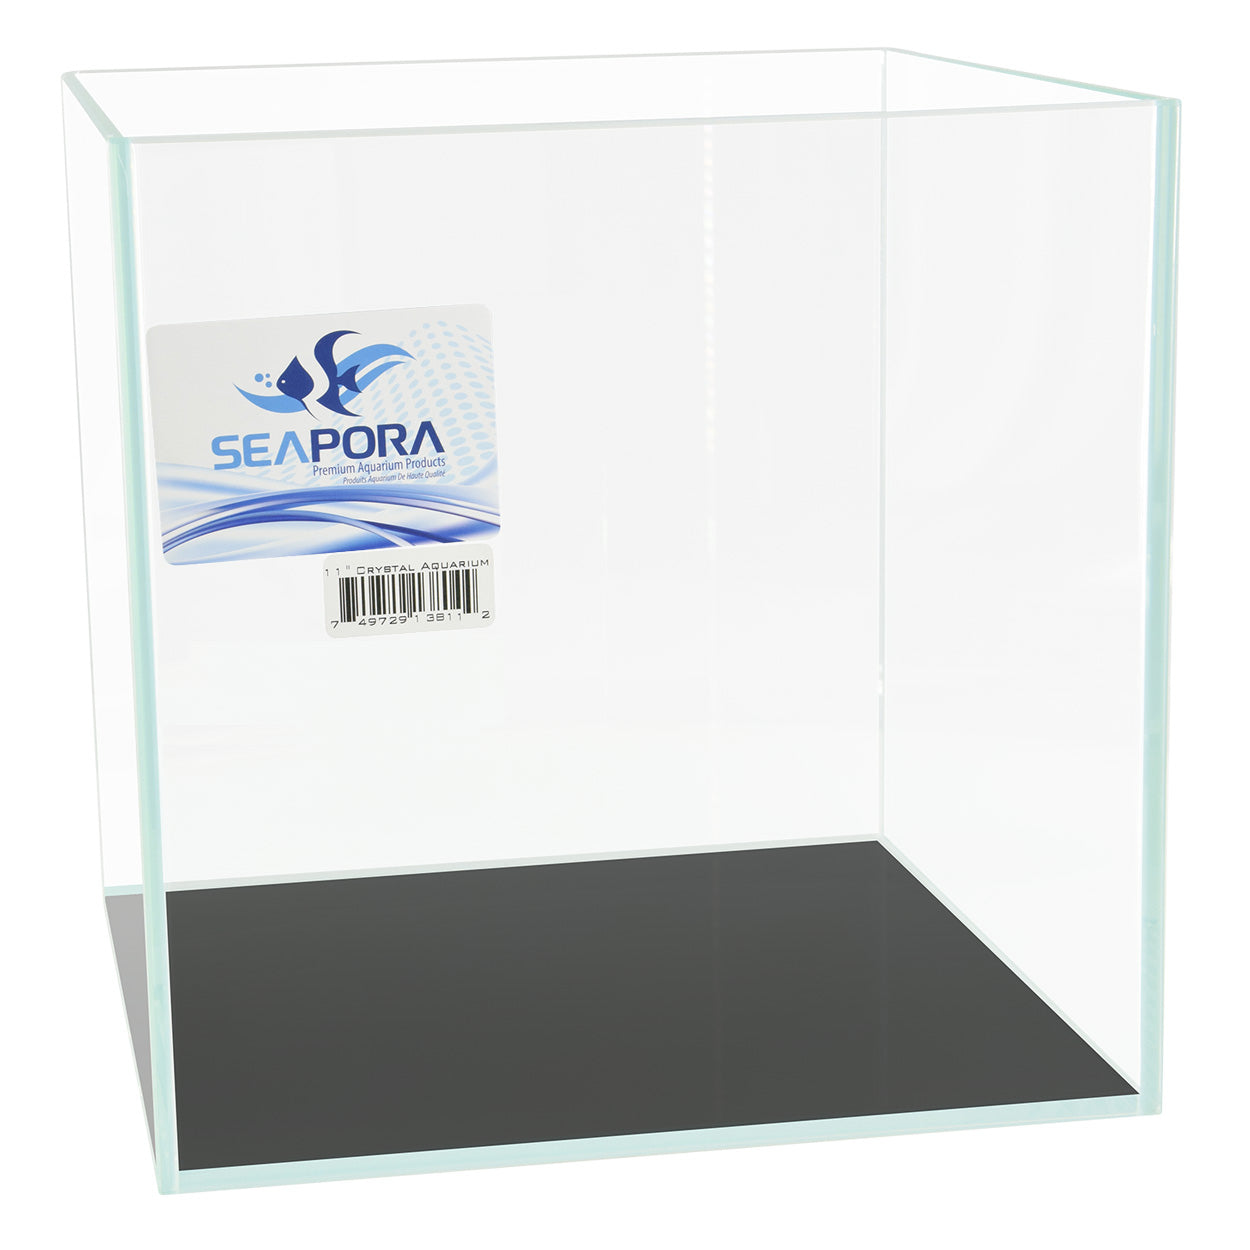 Seapora Crystal Series Aquarium - 11 Gallons Cube 14x14x14